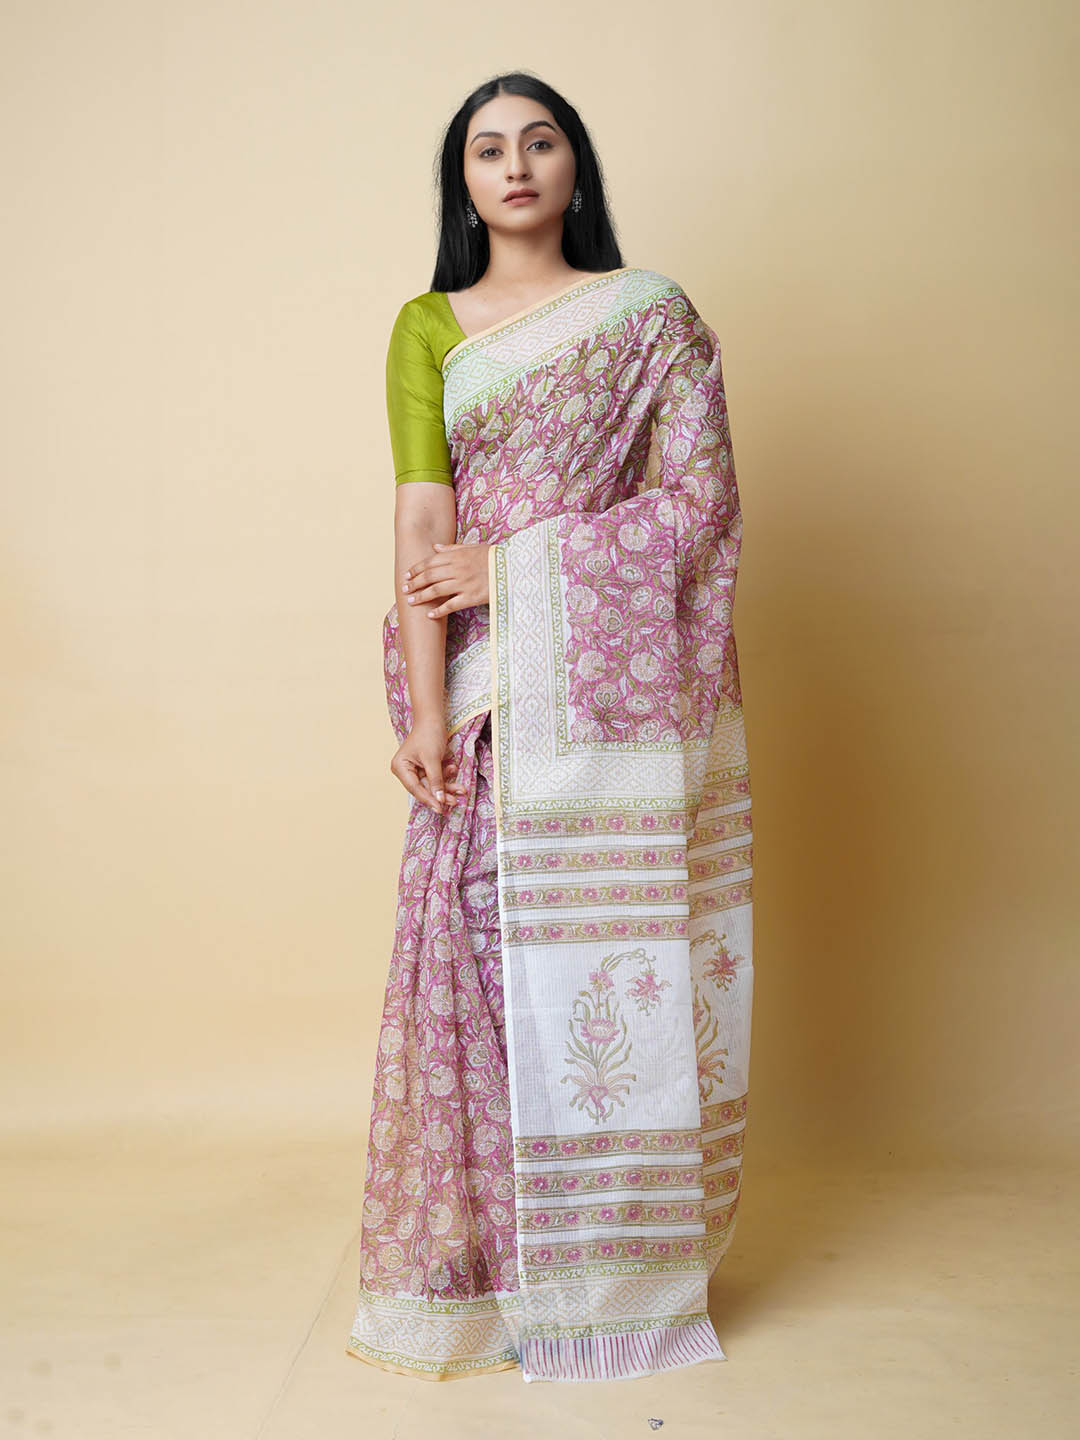 Unnati Silks Pink & Green Ethnic Motifs Pure Cotton Kota Saree Price in India